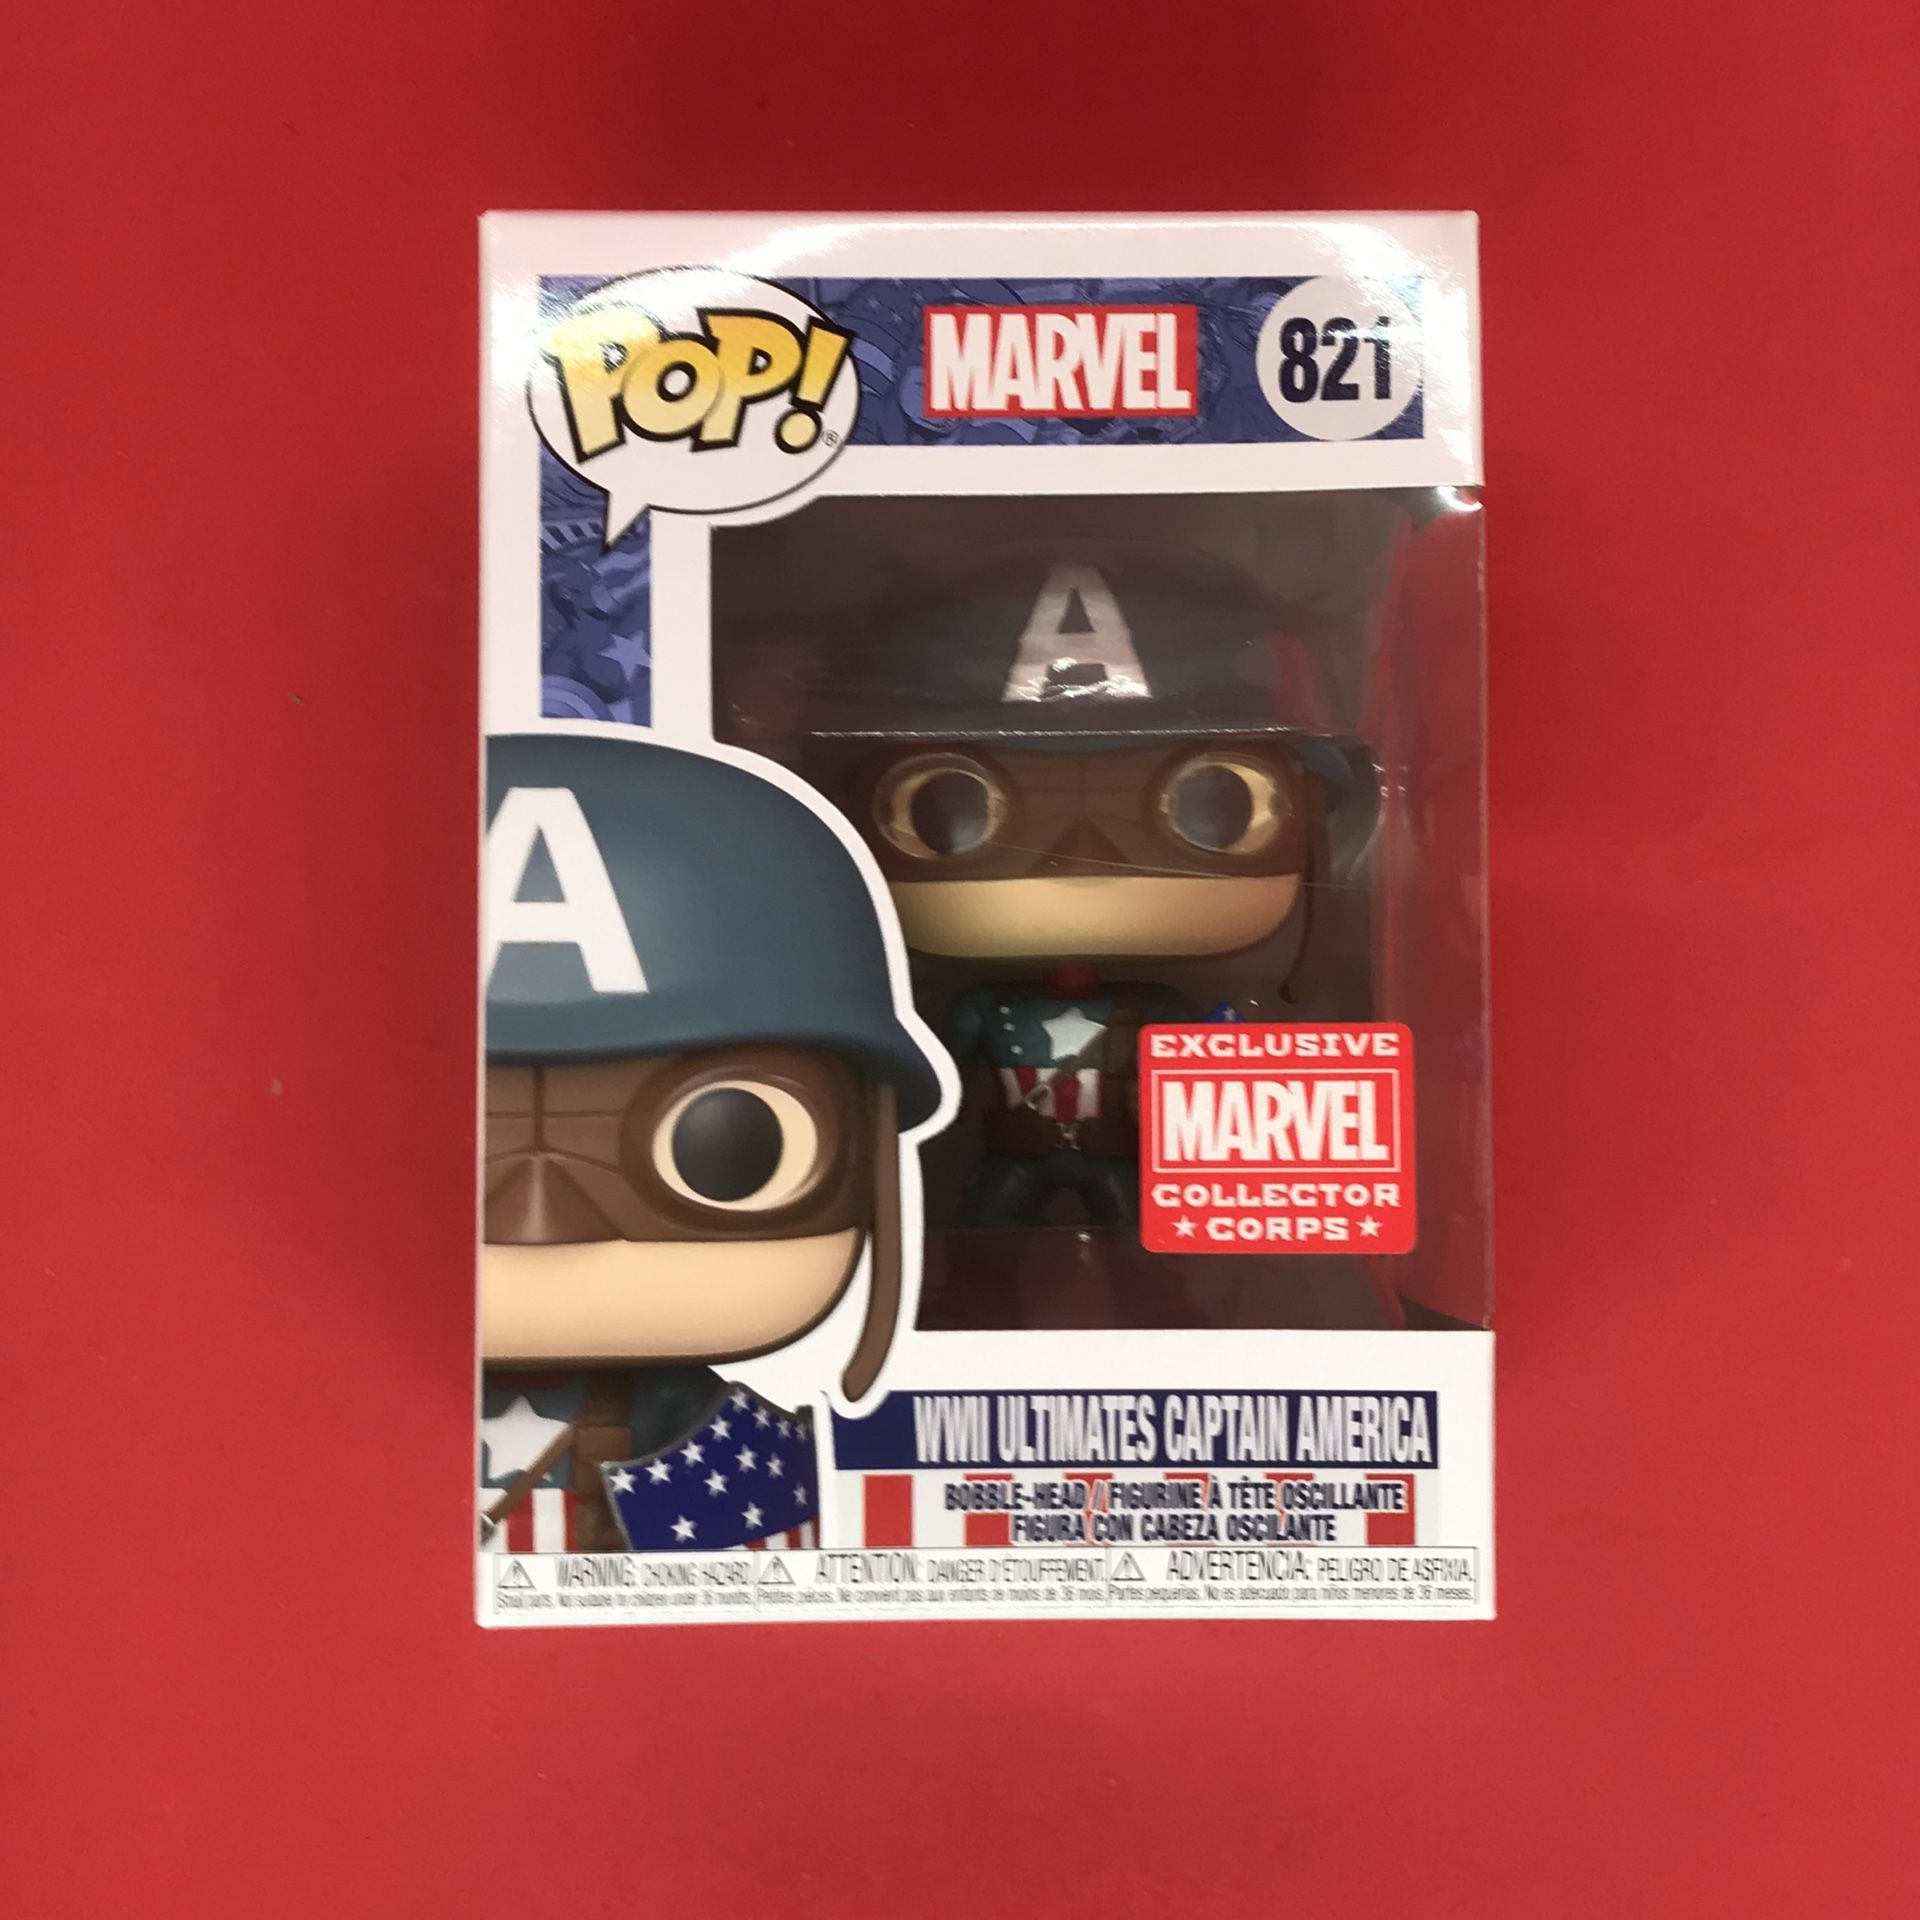 Funko POP! MCC Exclusive WWII Ultimates Captain America #821 - Avengers - Marvel